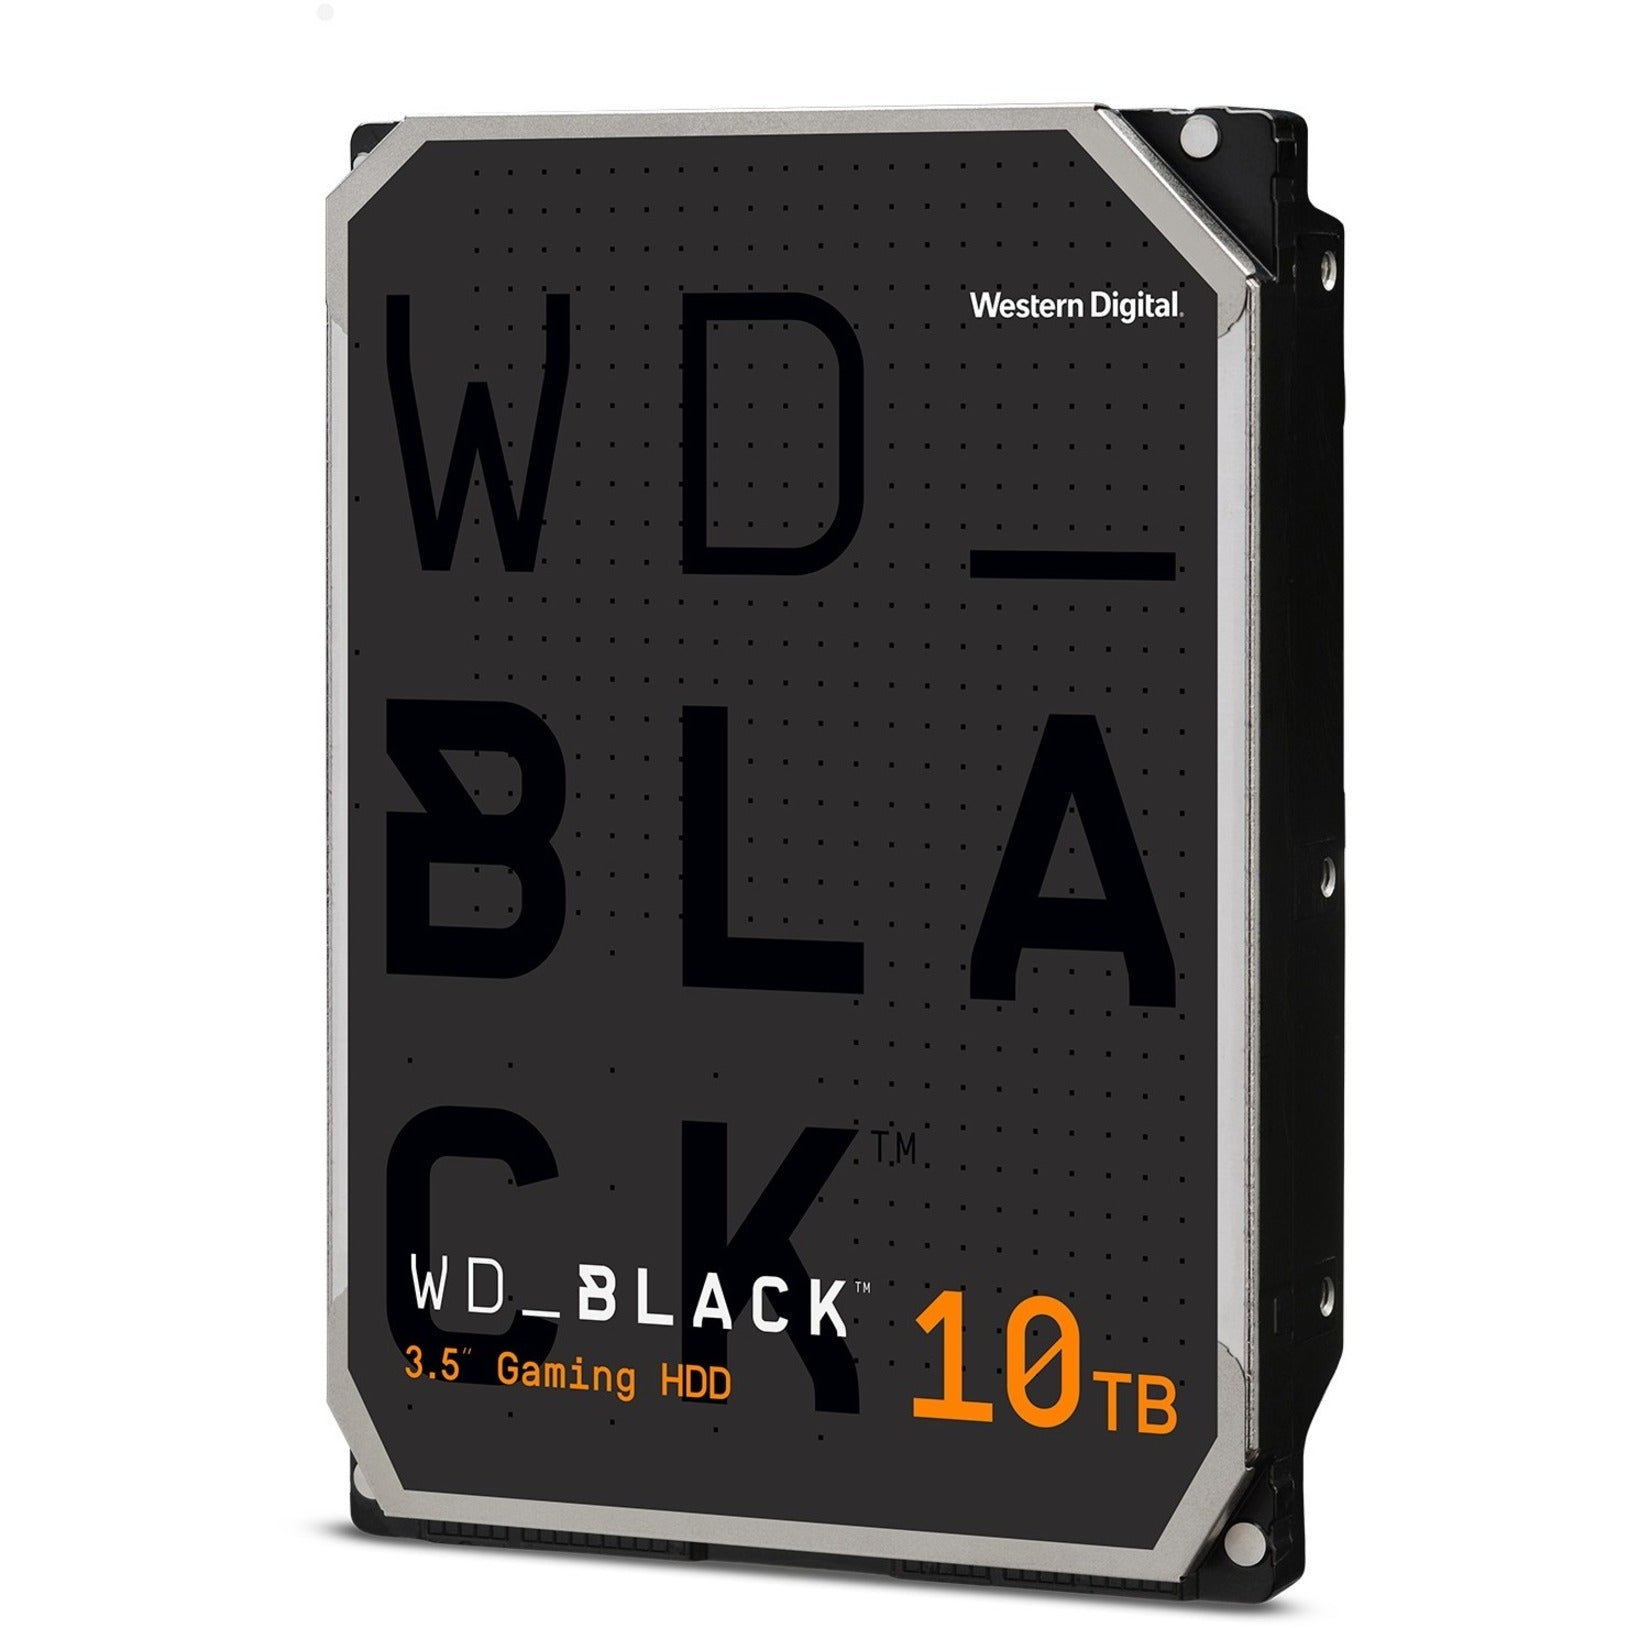 Western Digital WD101FZBX BLACK 10TB 3.5-inch Performance Hard Drive, 5 Year Warranty, SATA/600, 7200 RPM, 256MB Buffer